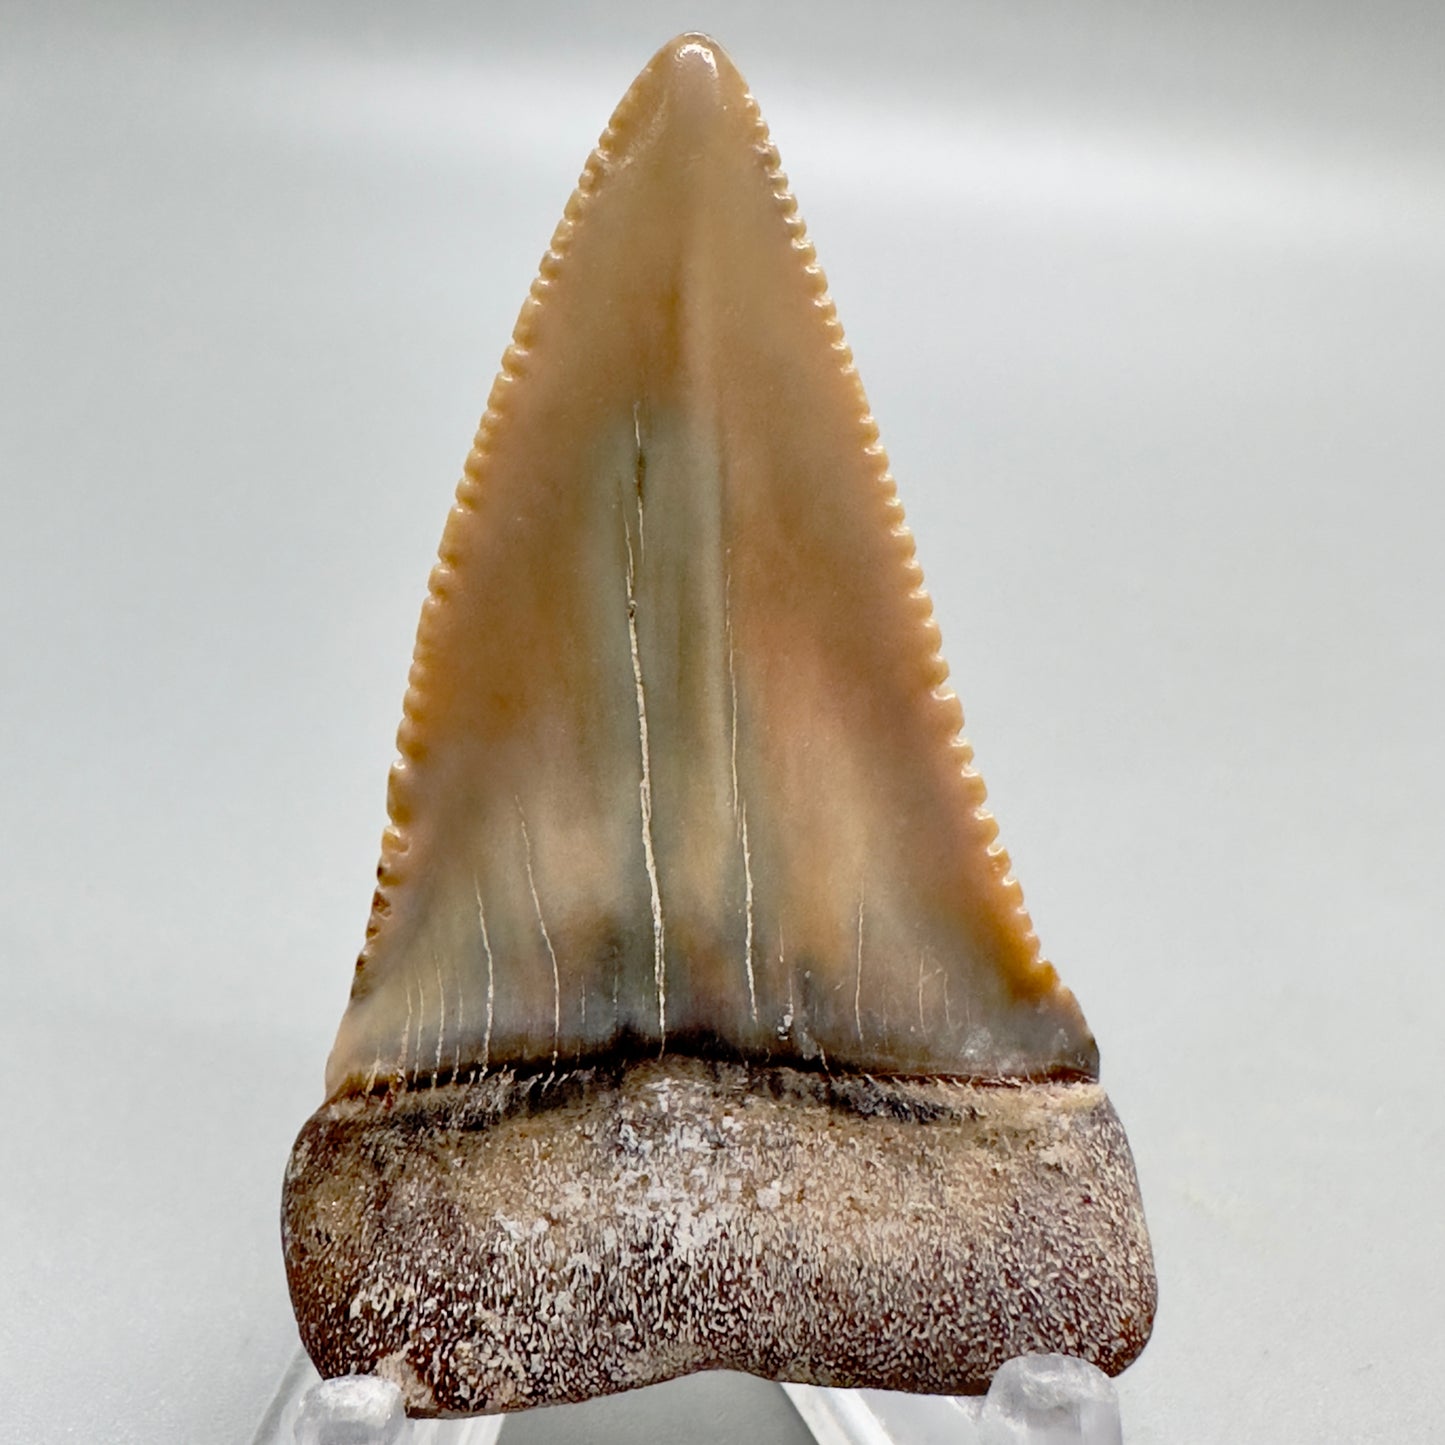 Cream and orange great white shark tooth 2.16 inch Peru GW4 back